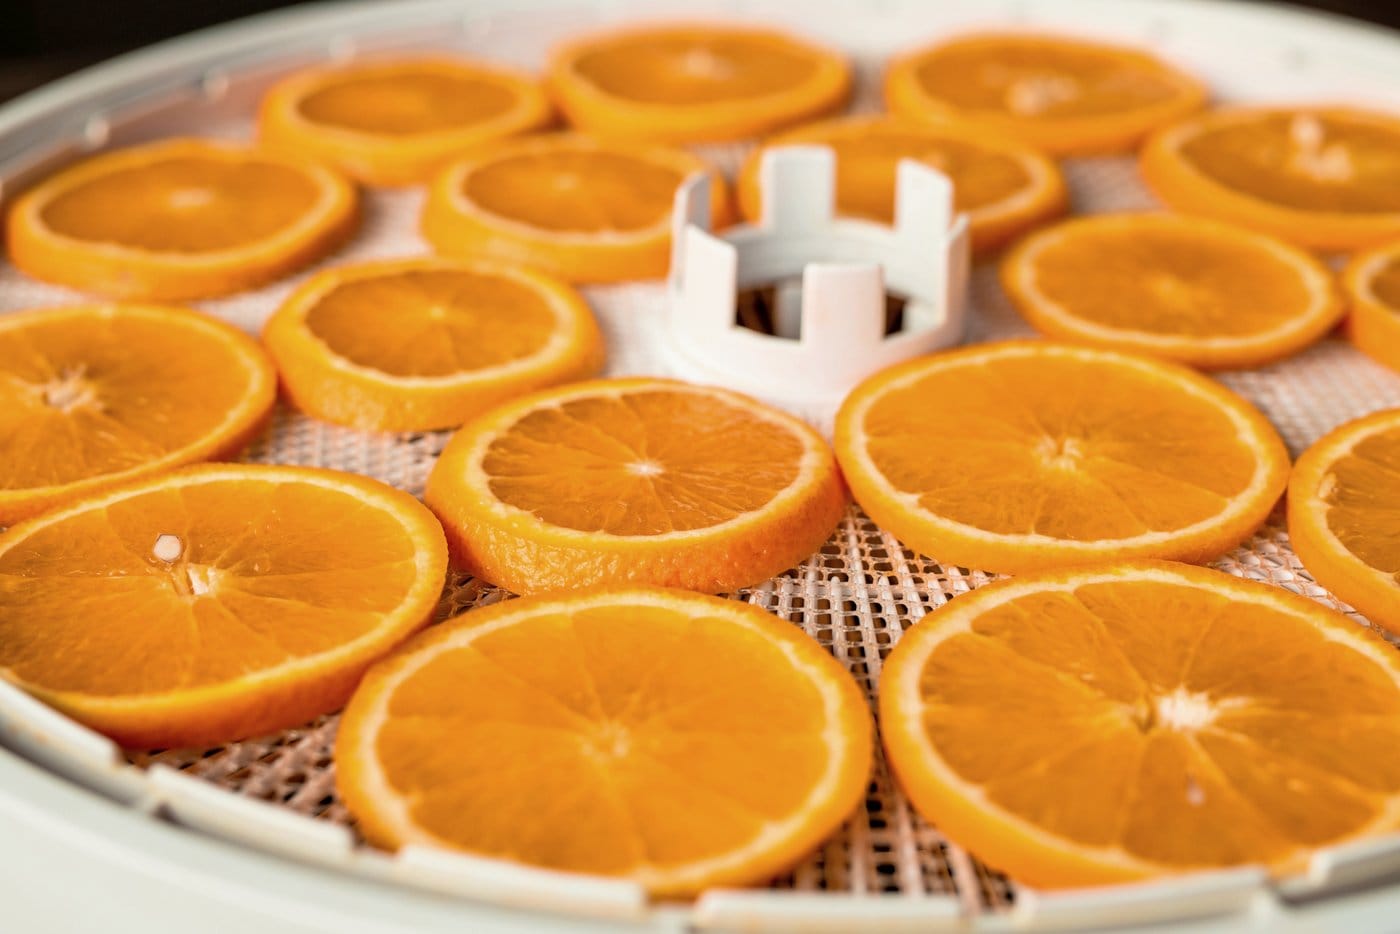 Dehydrating oranges